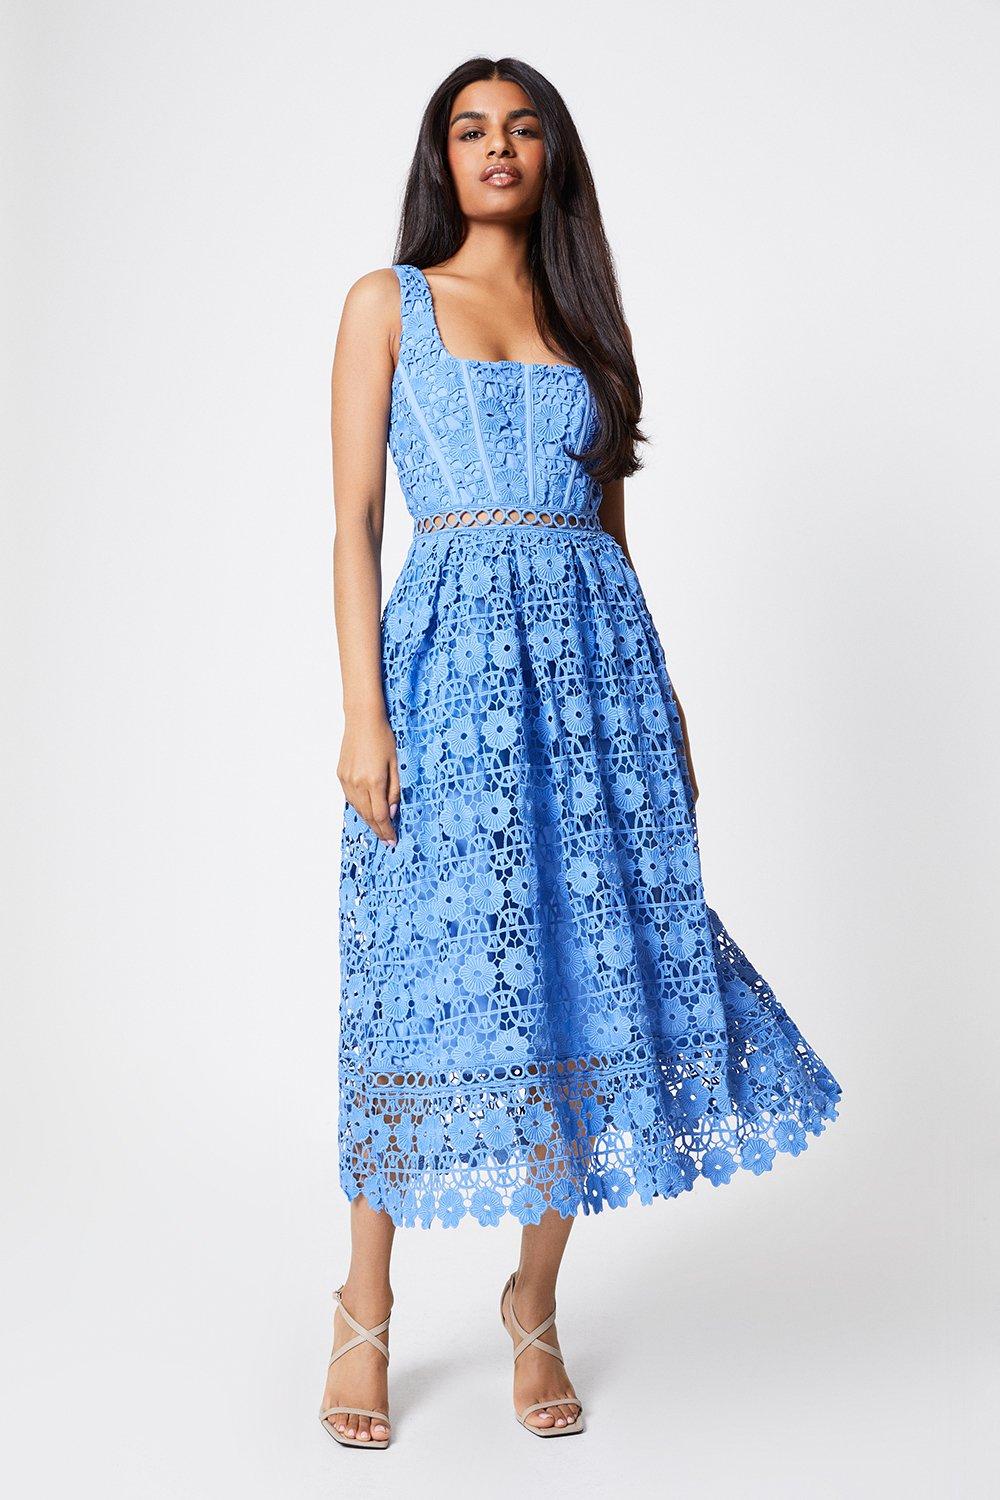 Petite Lace Dress With Square Neck - Blue